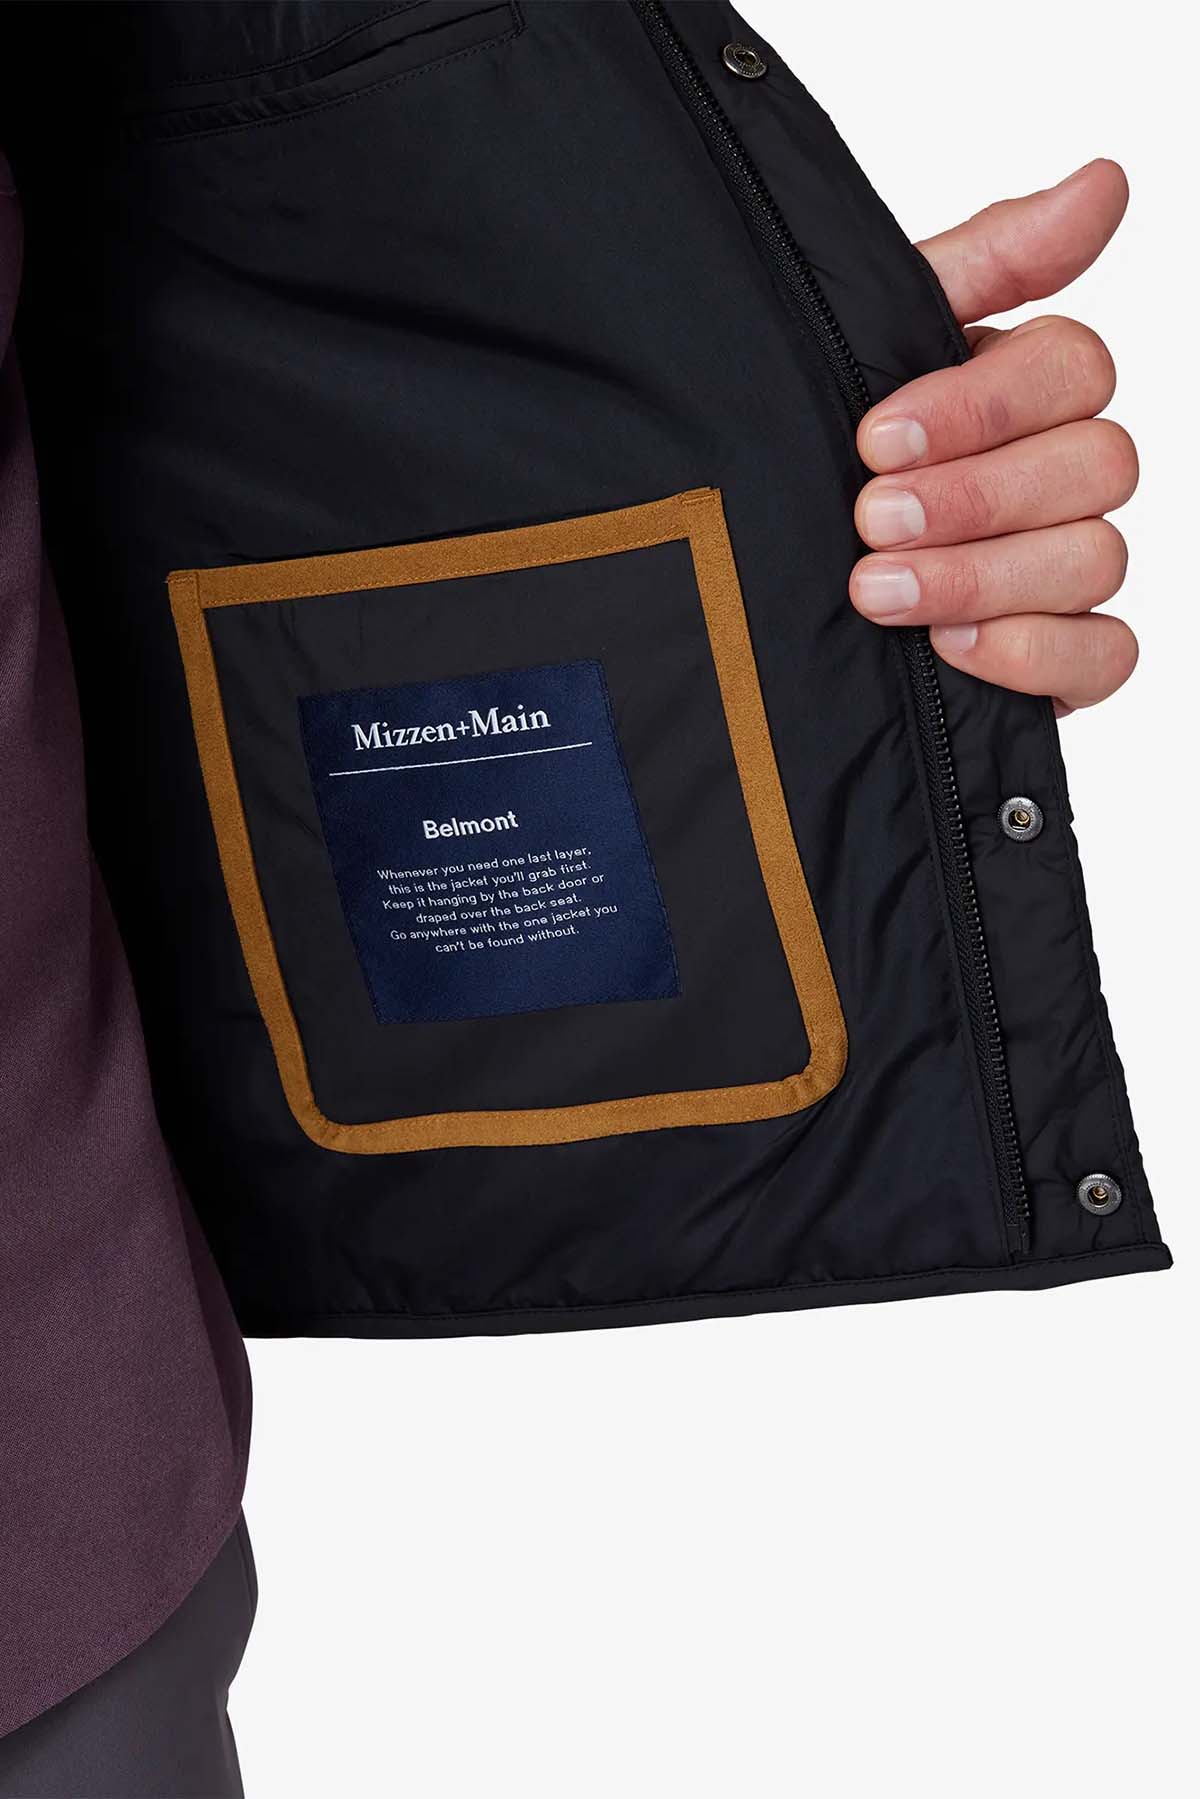 Mizzen + Main - Belmont Quilted Vest - Black Solid - Inside